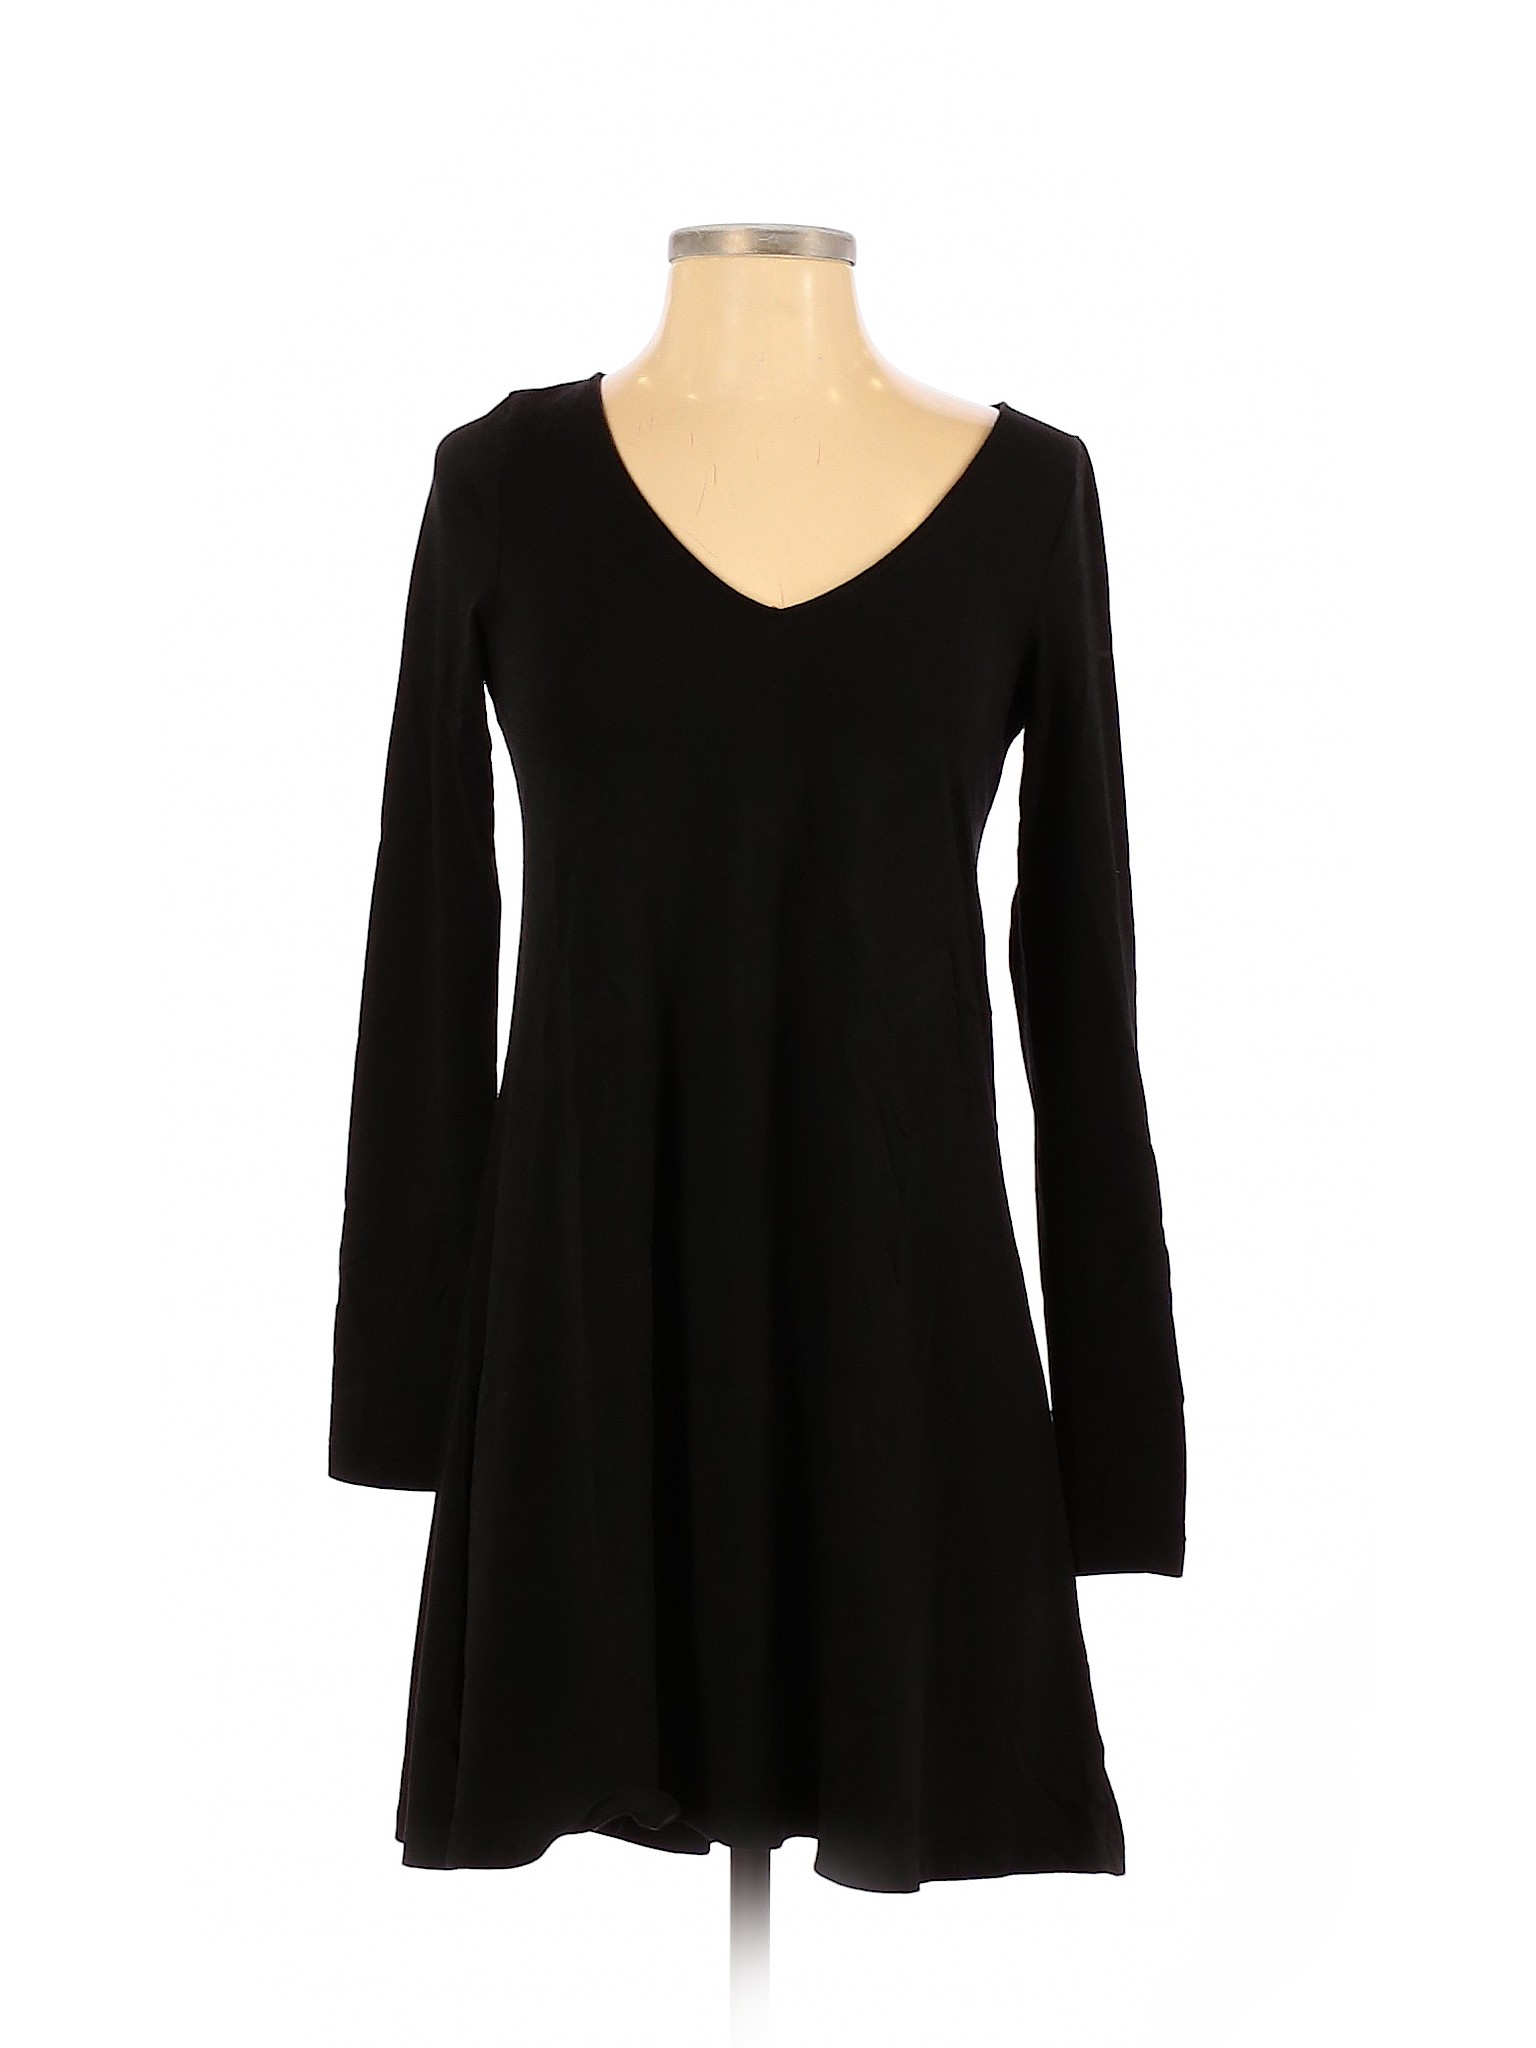 Express Women Black Casual Dress S | eBay